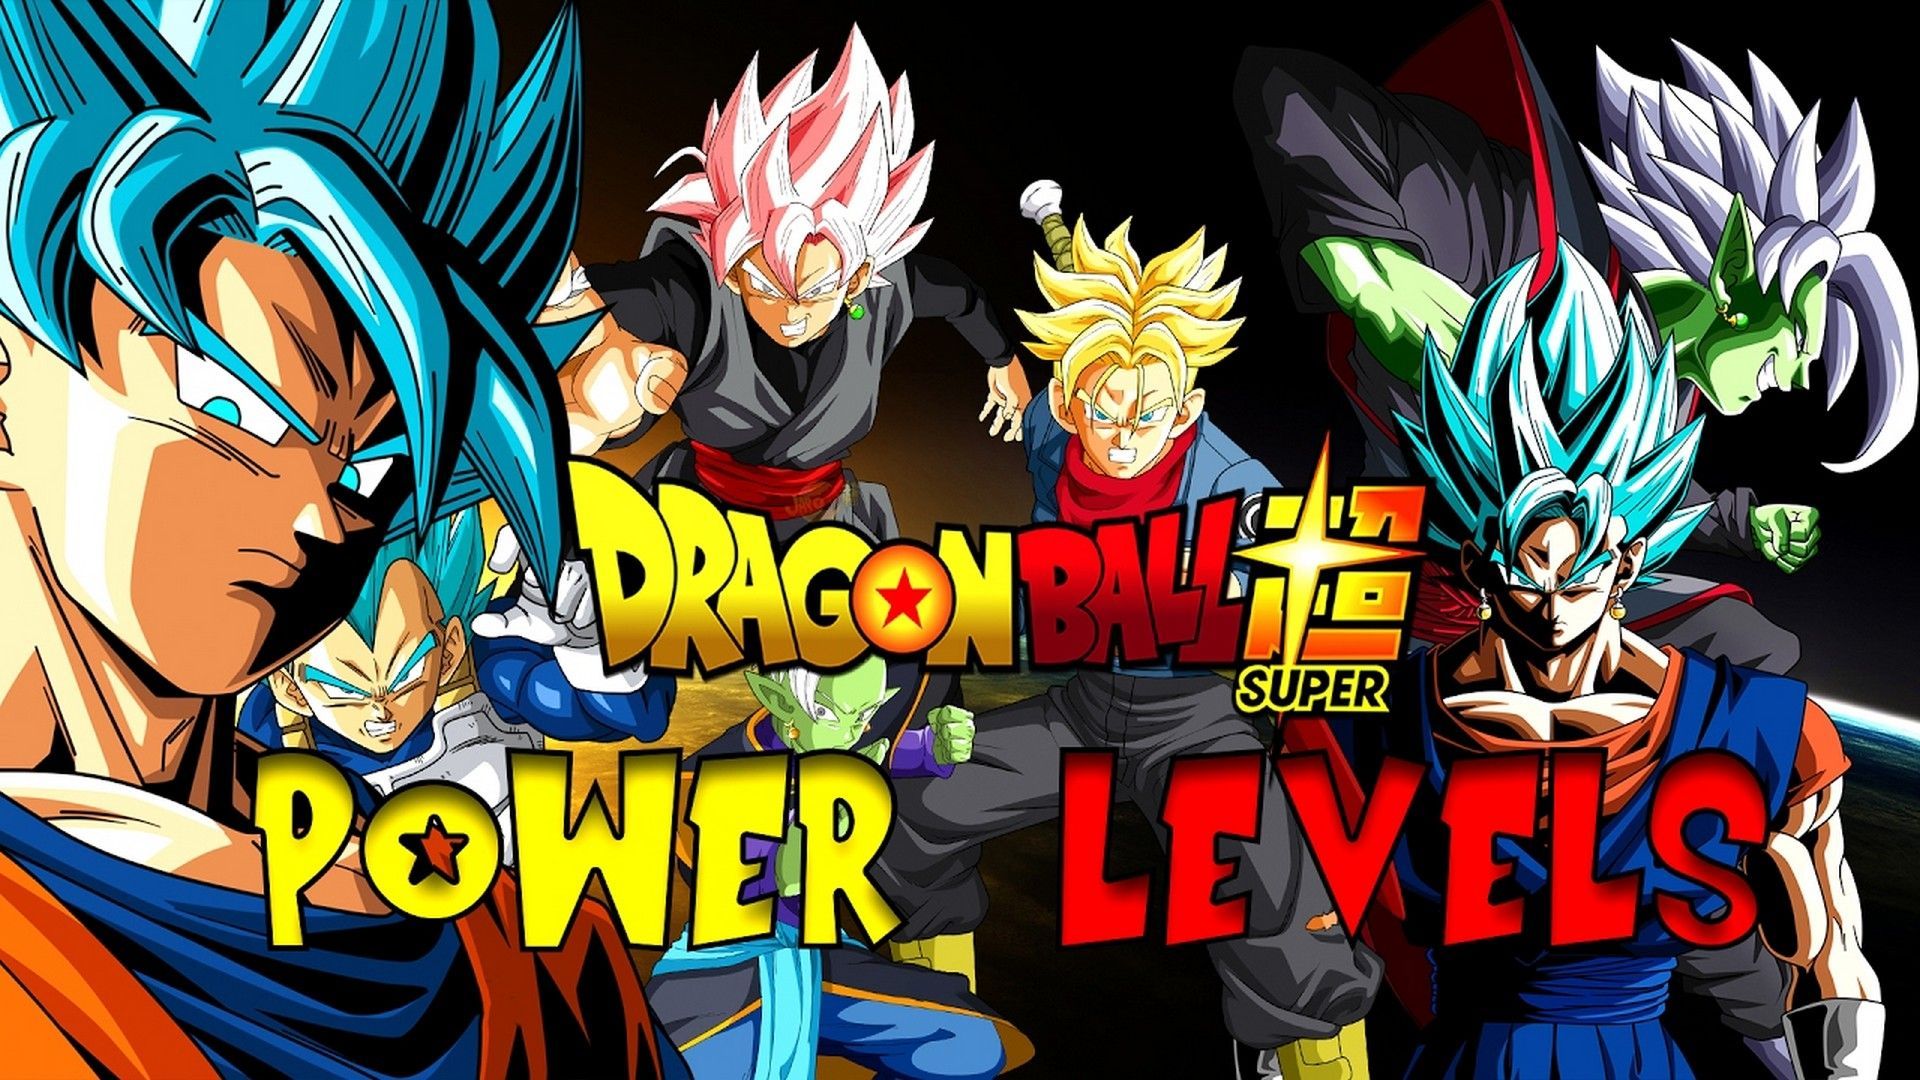 Dragon Ball Super Power Levels Wallpaper. Super powers, Dragon